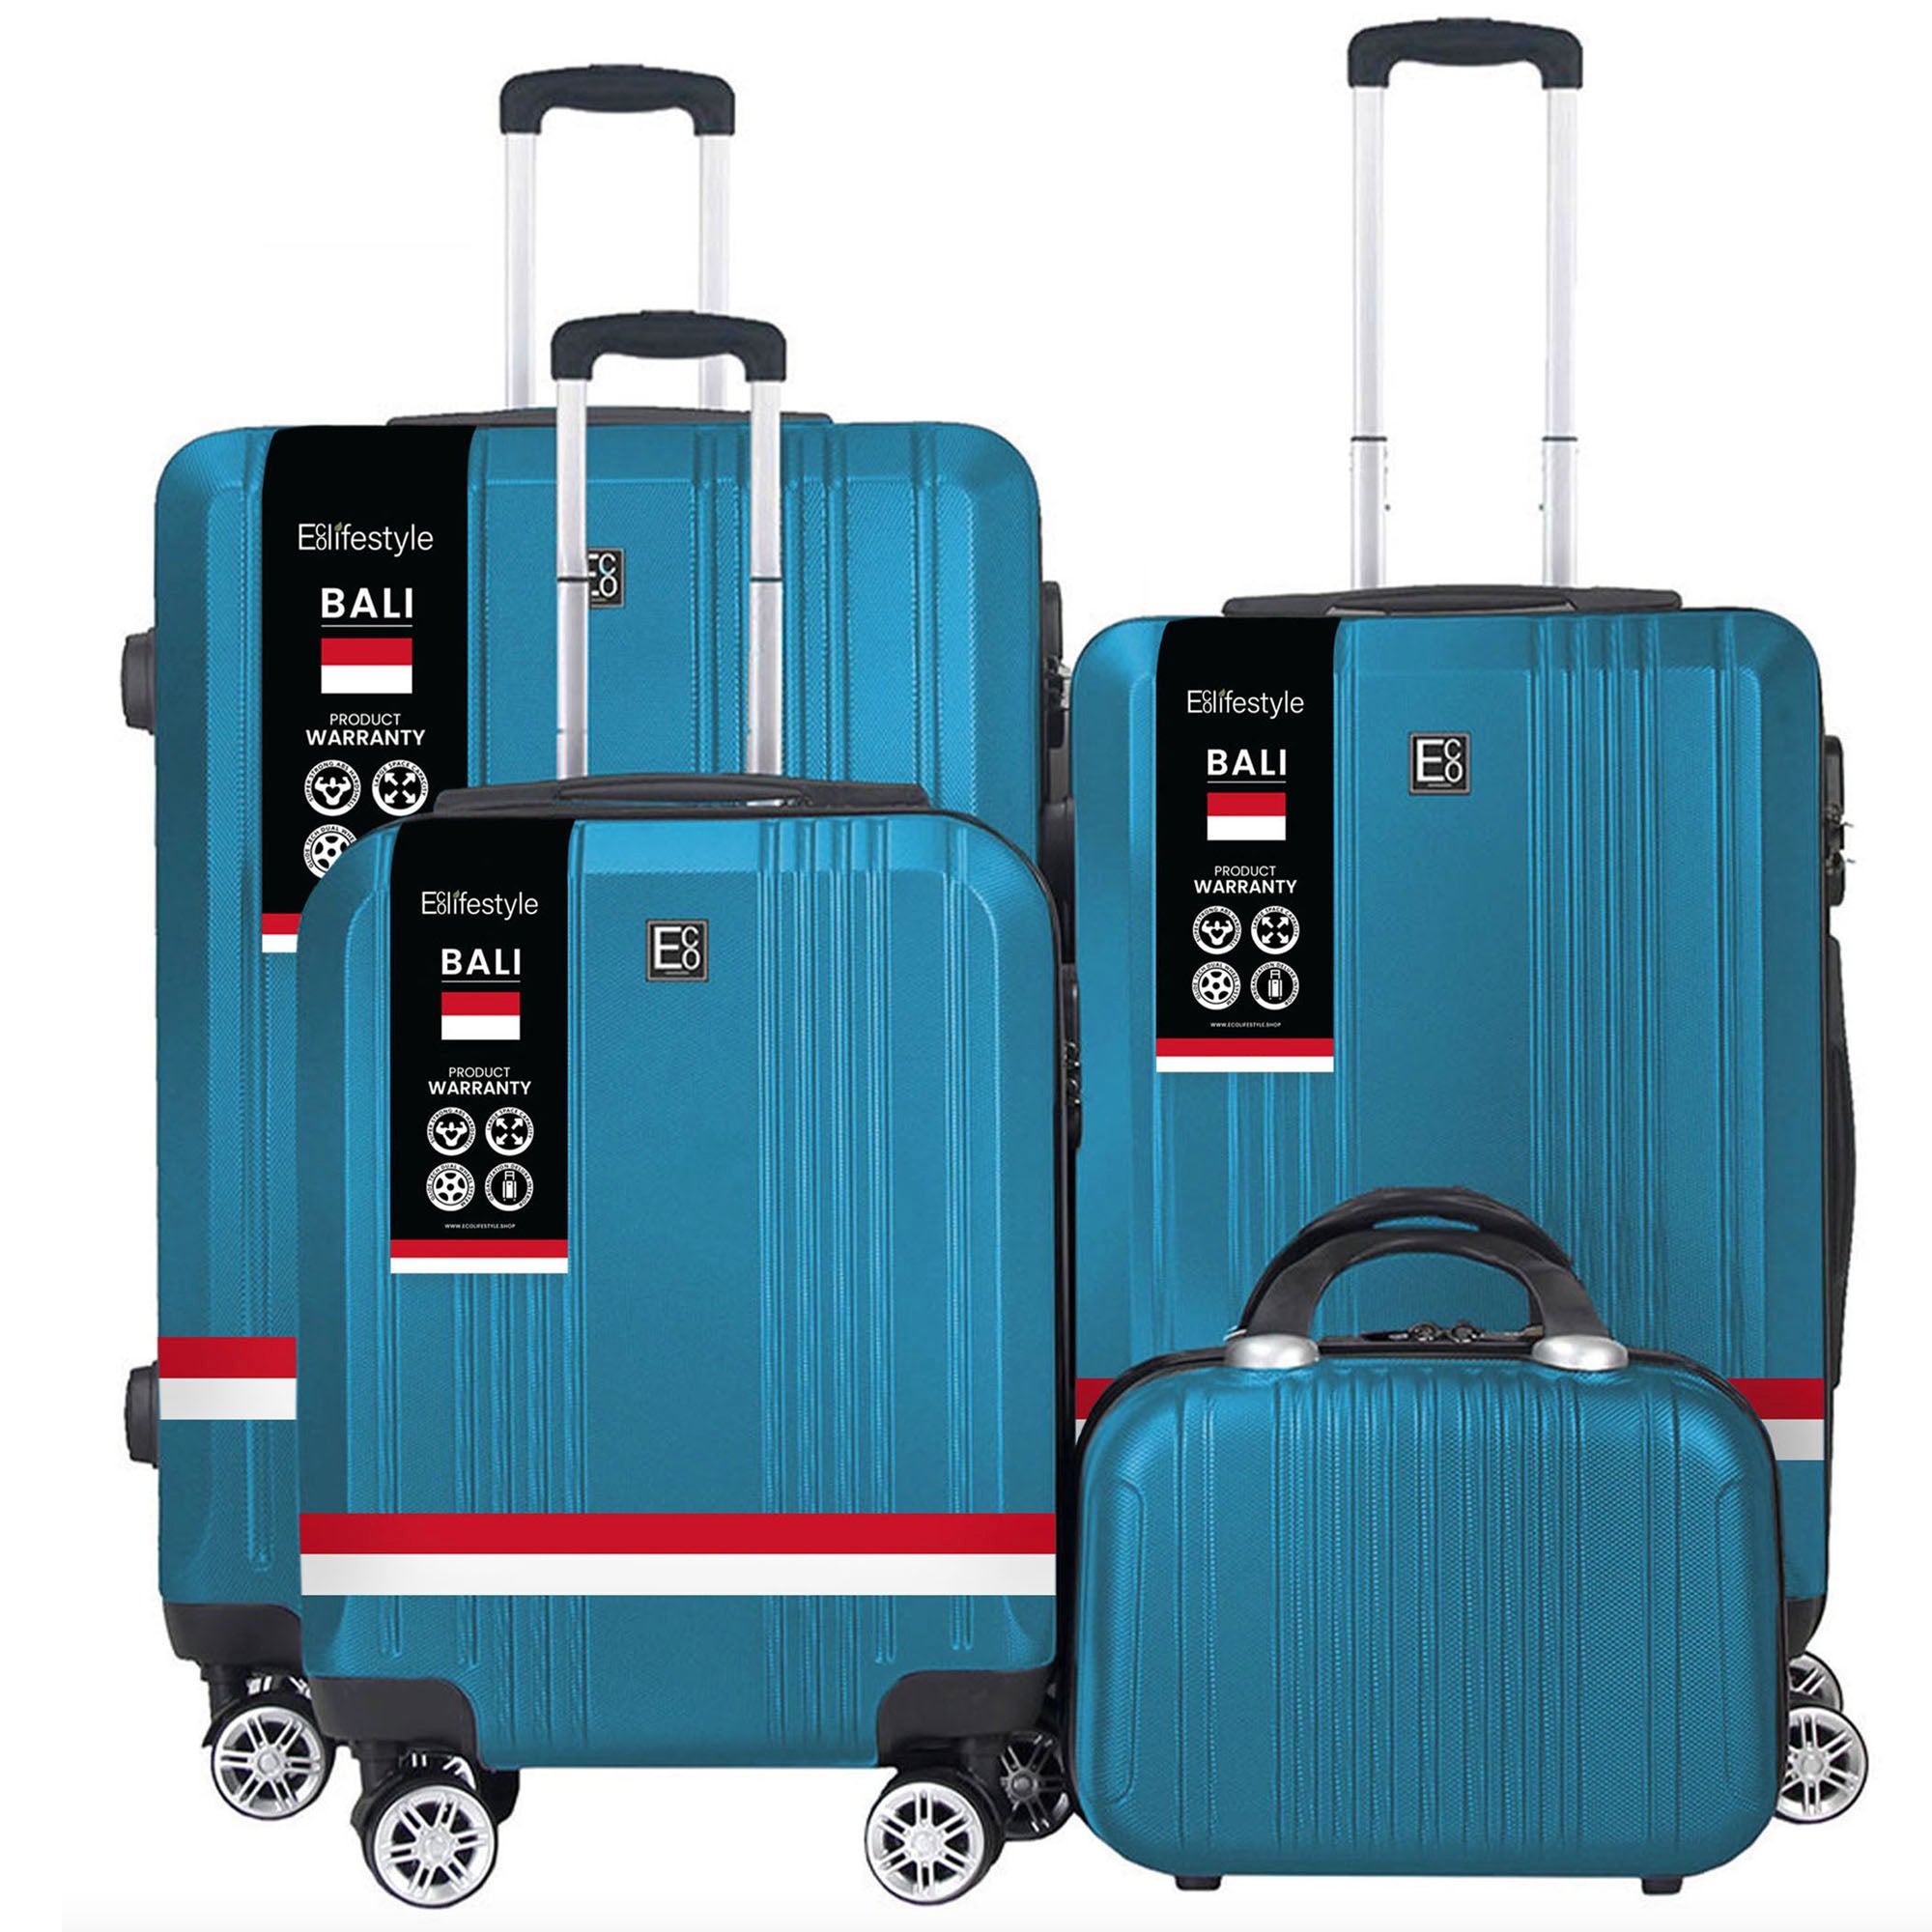 Pre-Order Bali Premium Luggage Value Set - 4 Pieces - Coming Soon